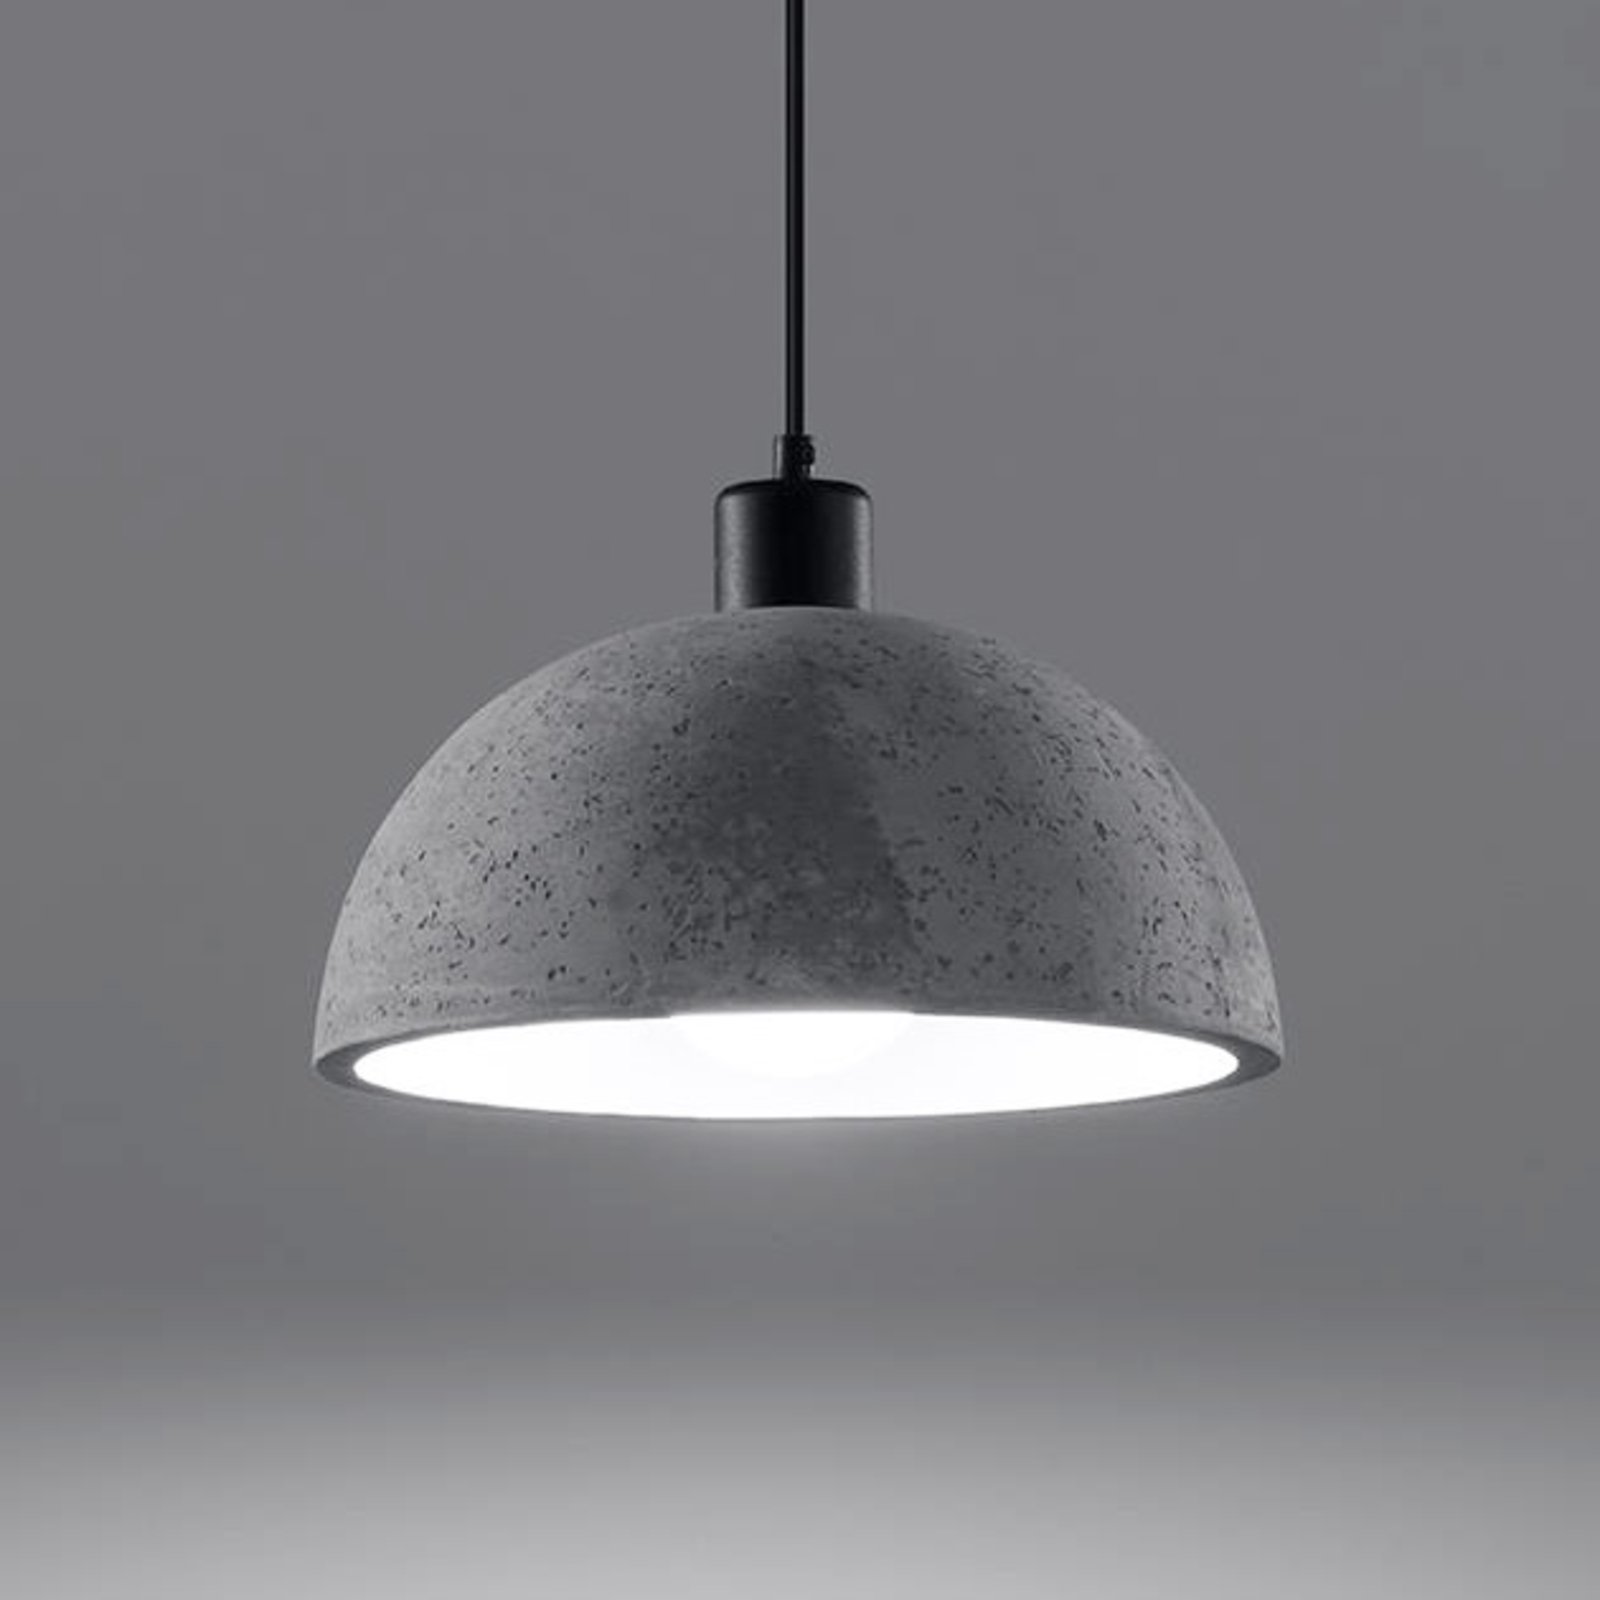 Lito pendant light, concrete hemisphere lampshade